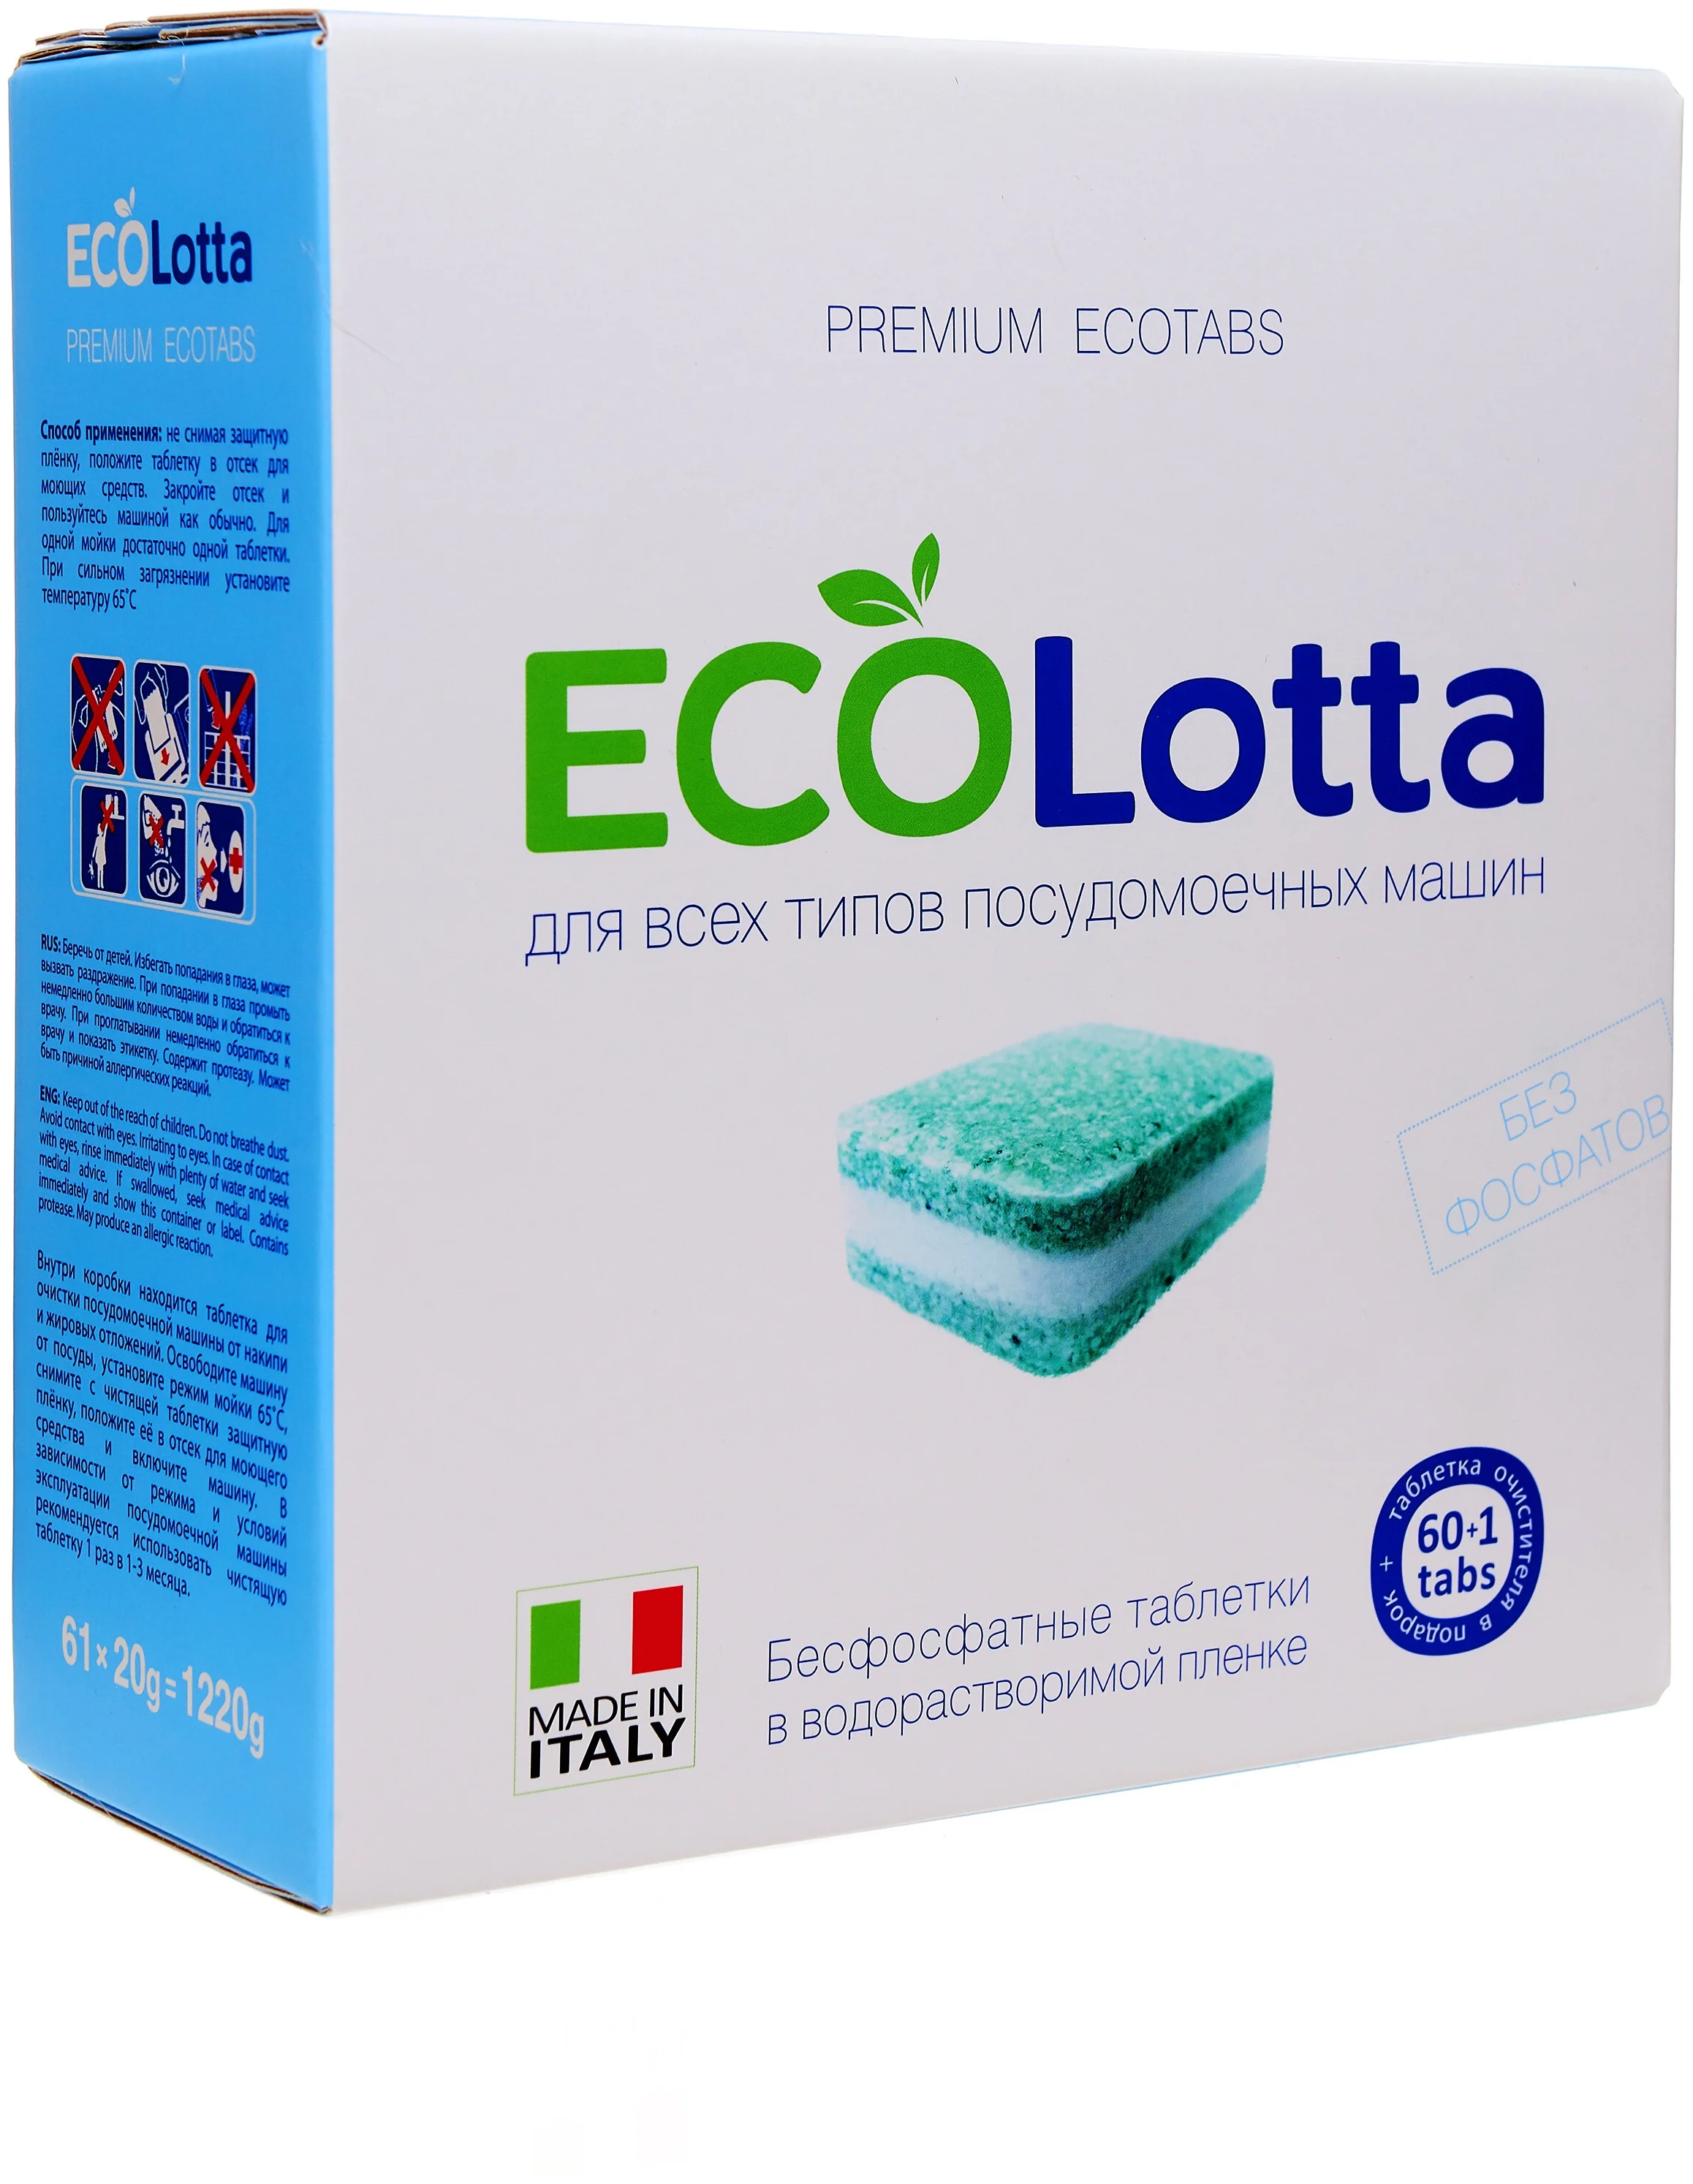 Lotta Eco - особенности: биоразлагаемое, растворимая оболочка